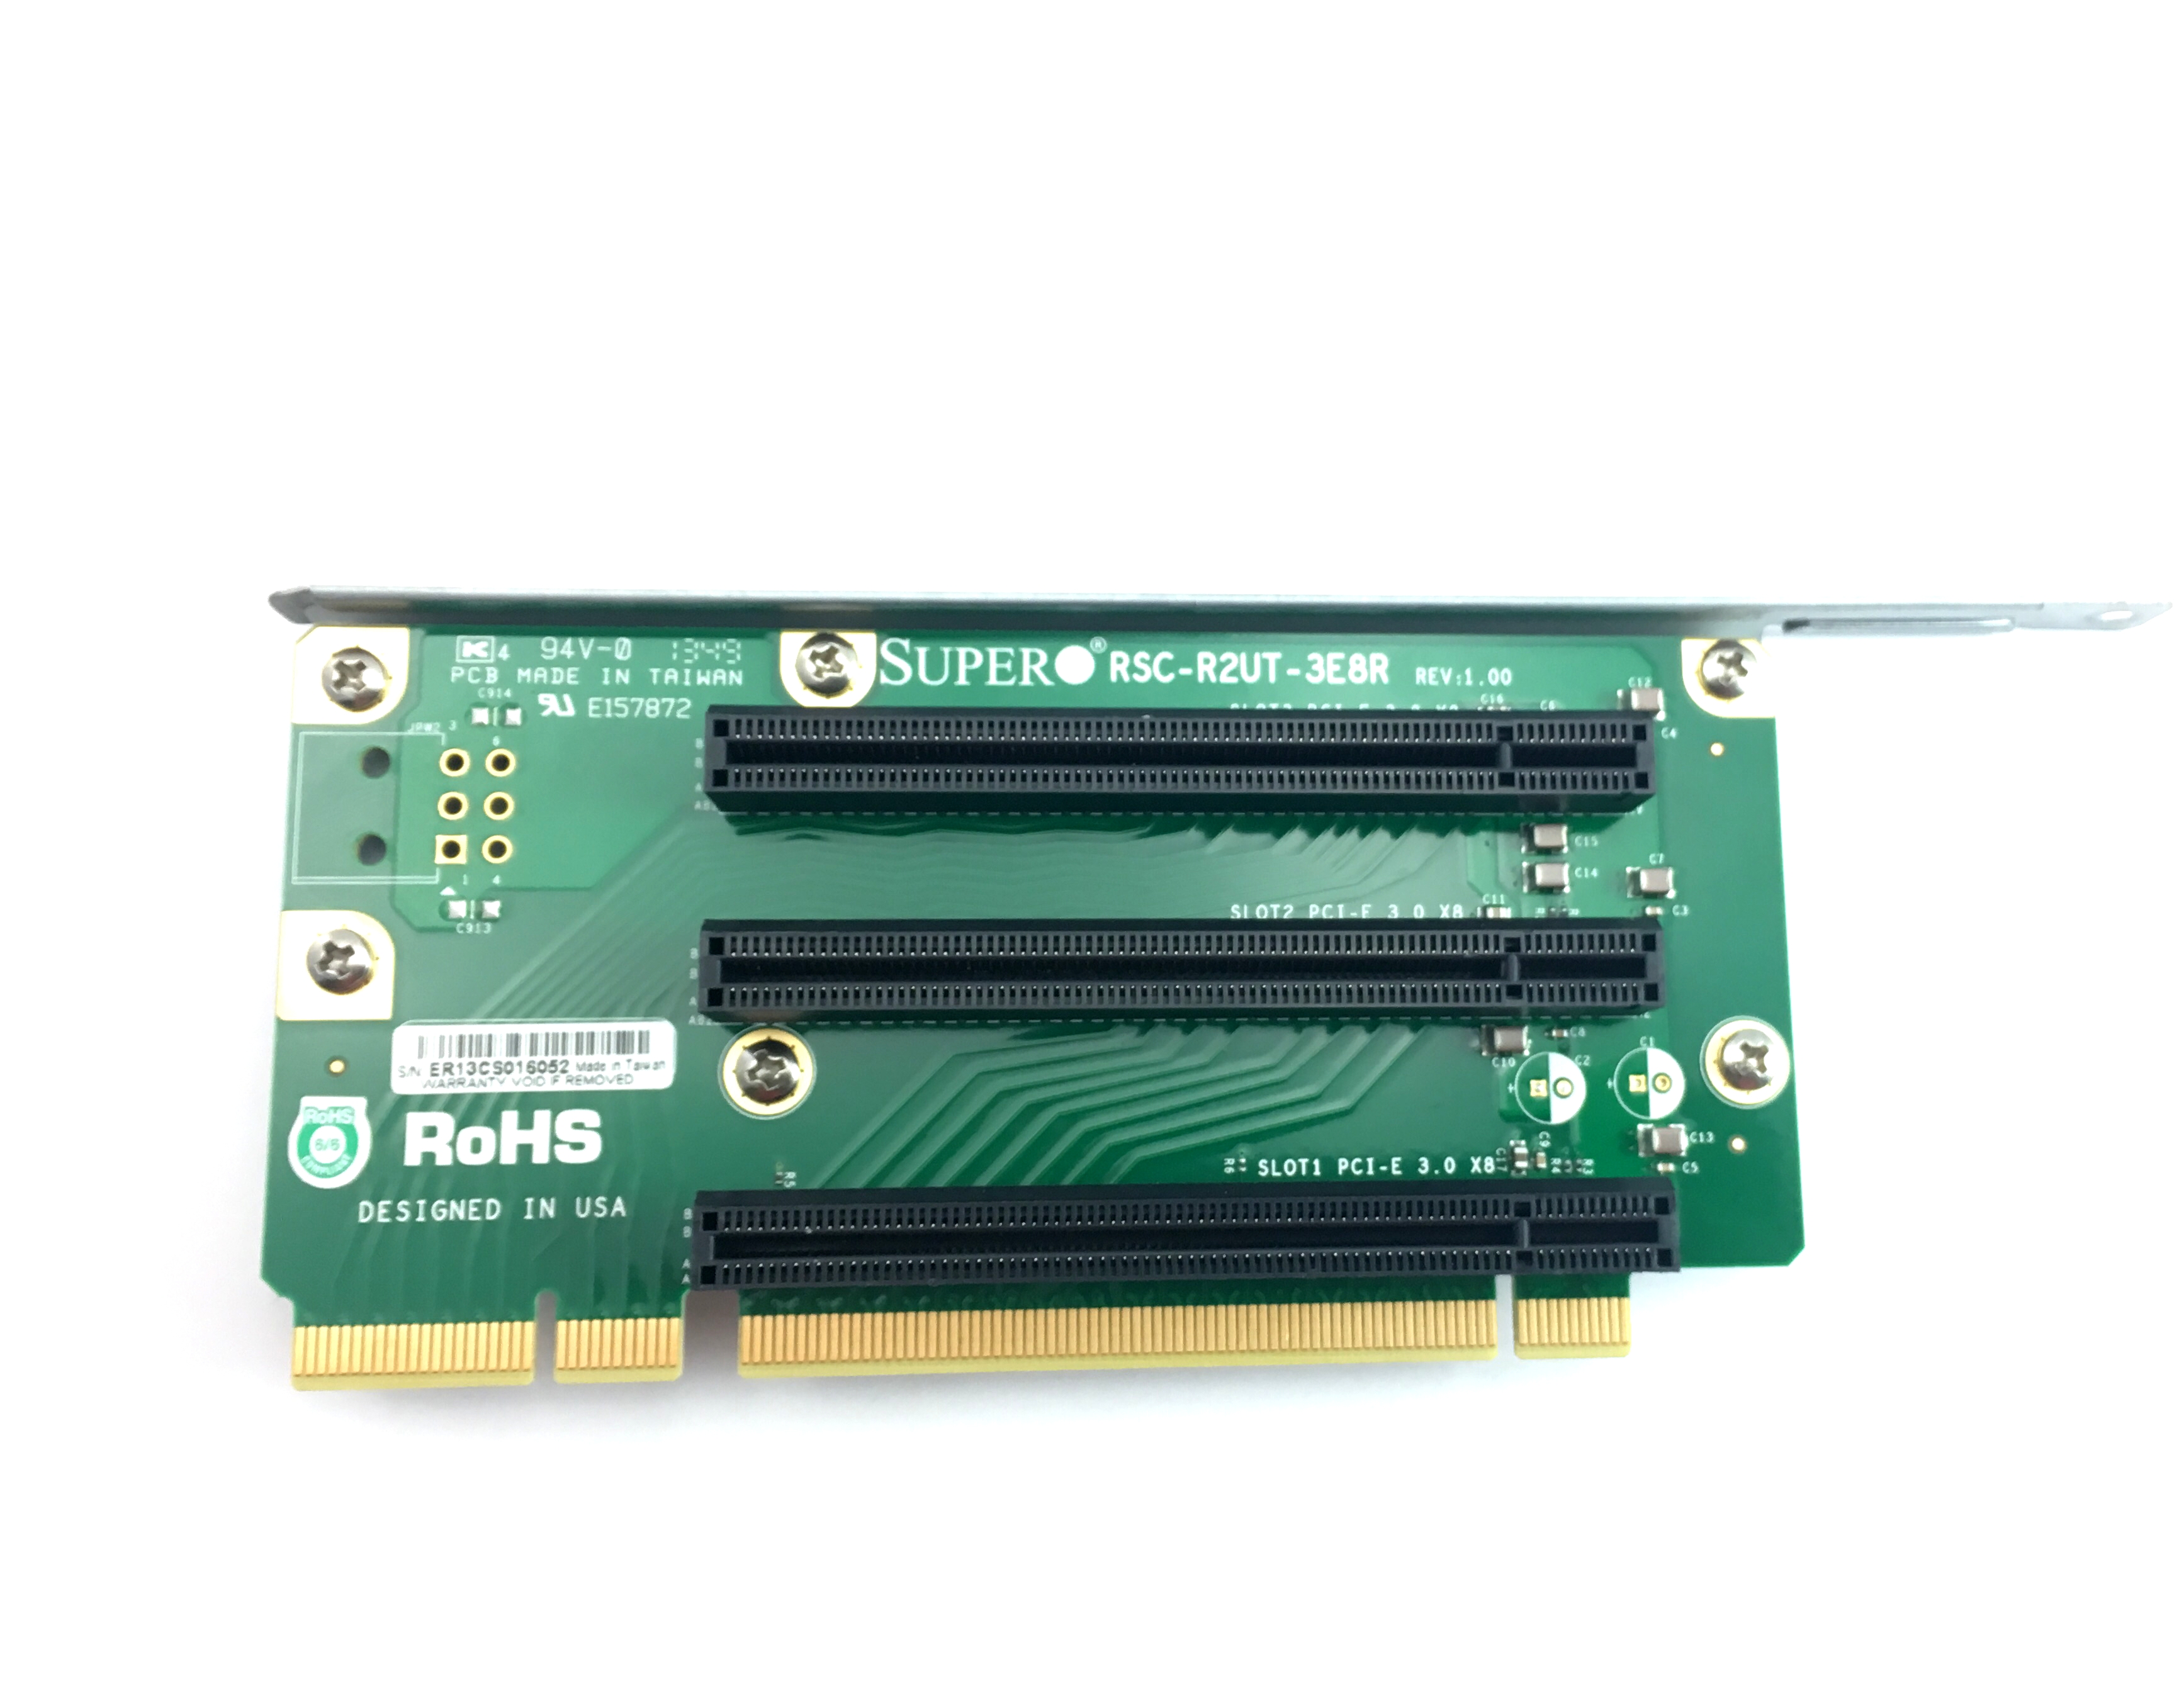 Supermicro Rsc-R2Ut-3E8R 2U PCI-E To PCI-E X8 Riser Card (RSC-R2UT-3E8R)